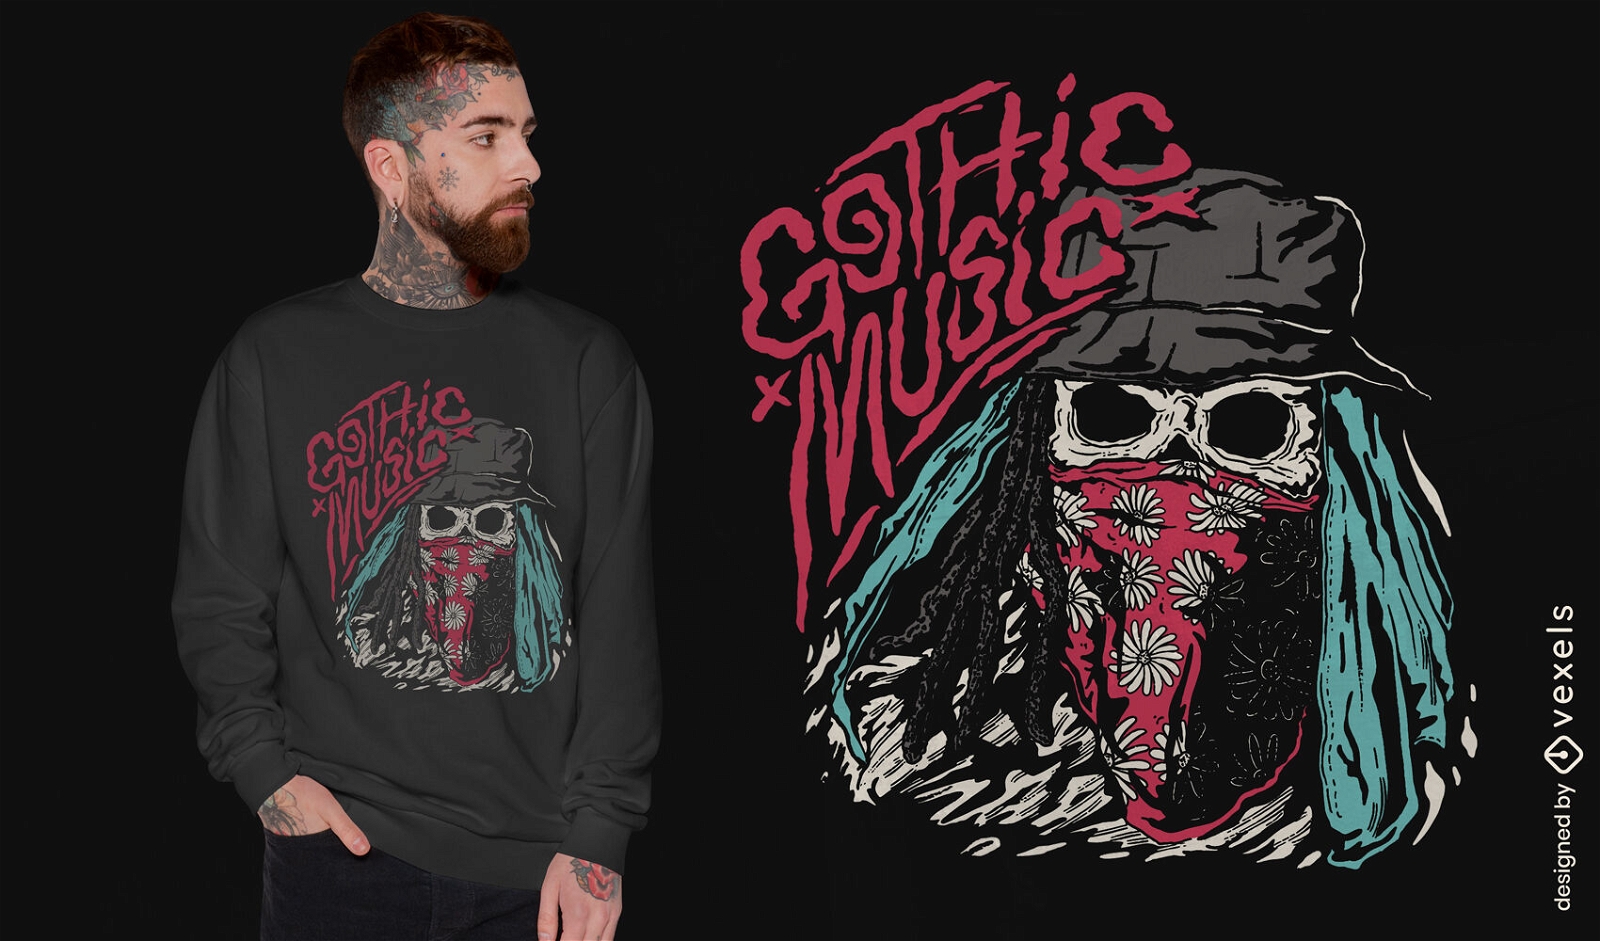 Goth music skeleton t-shirt design